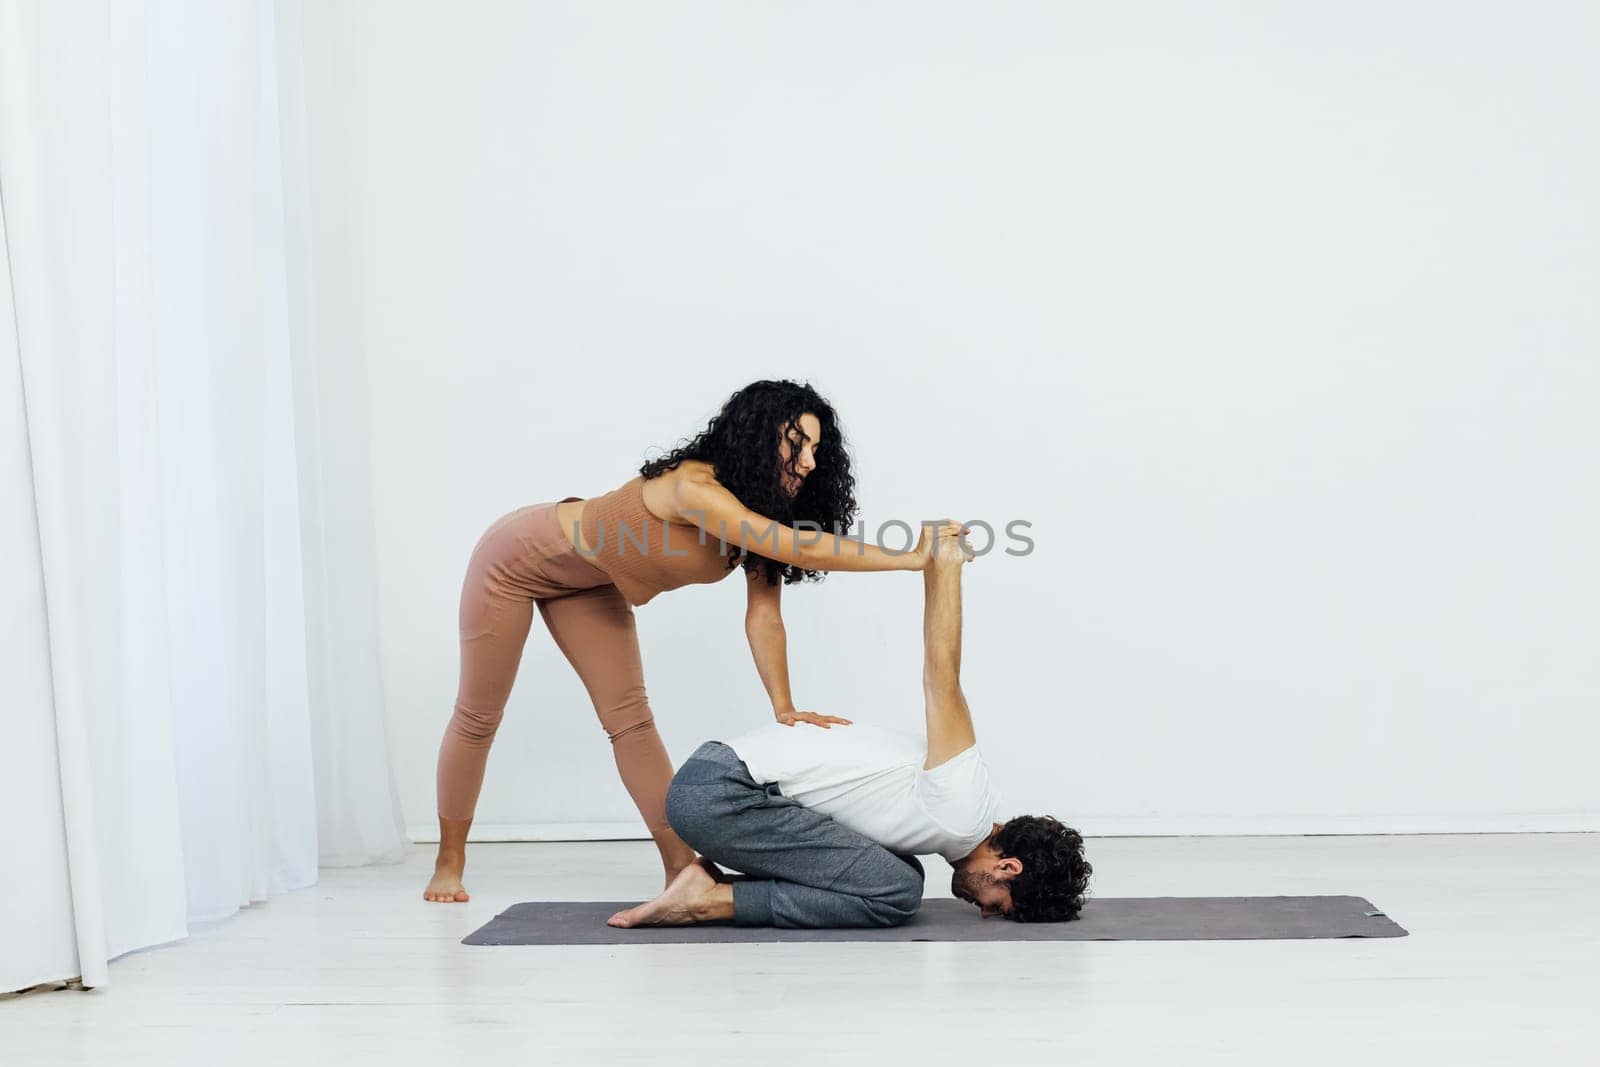 Man and woman doing yoga exercises meditation asana pose